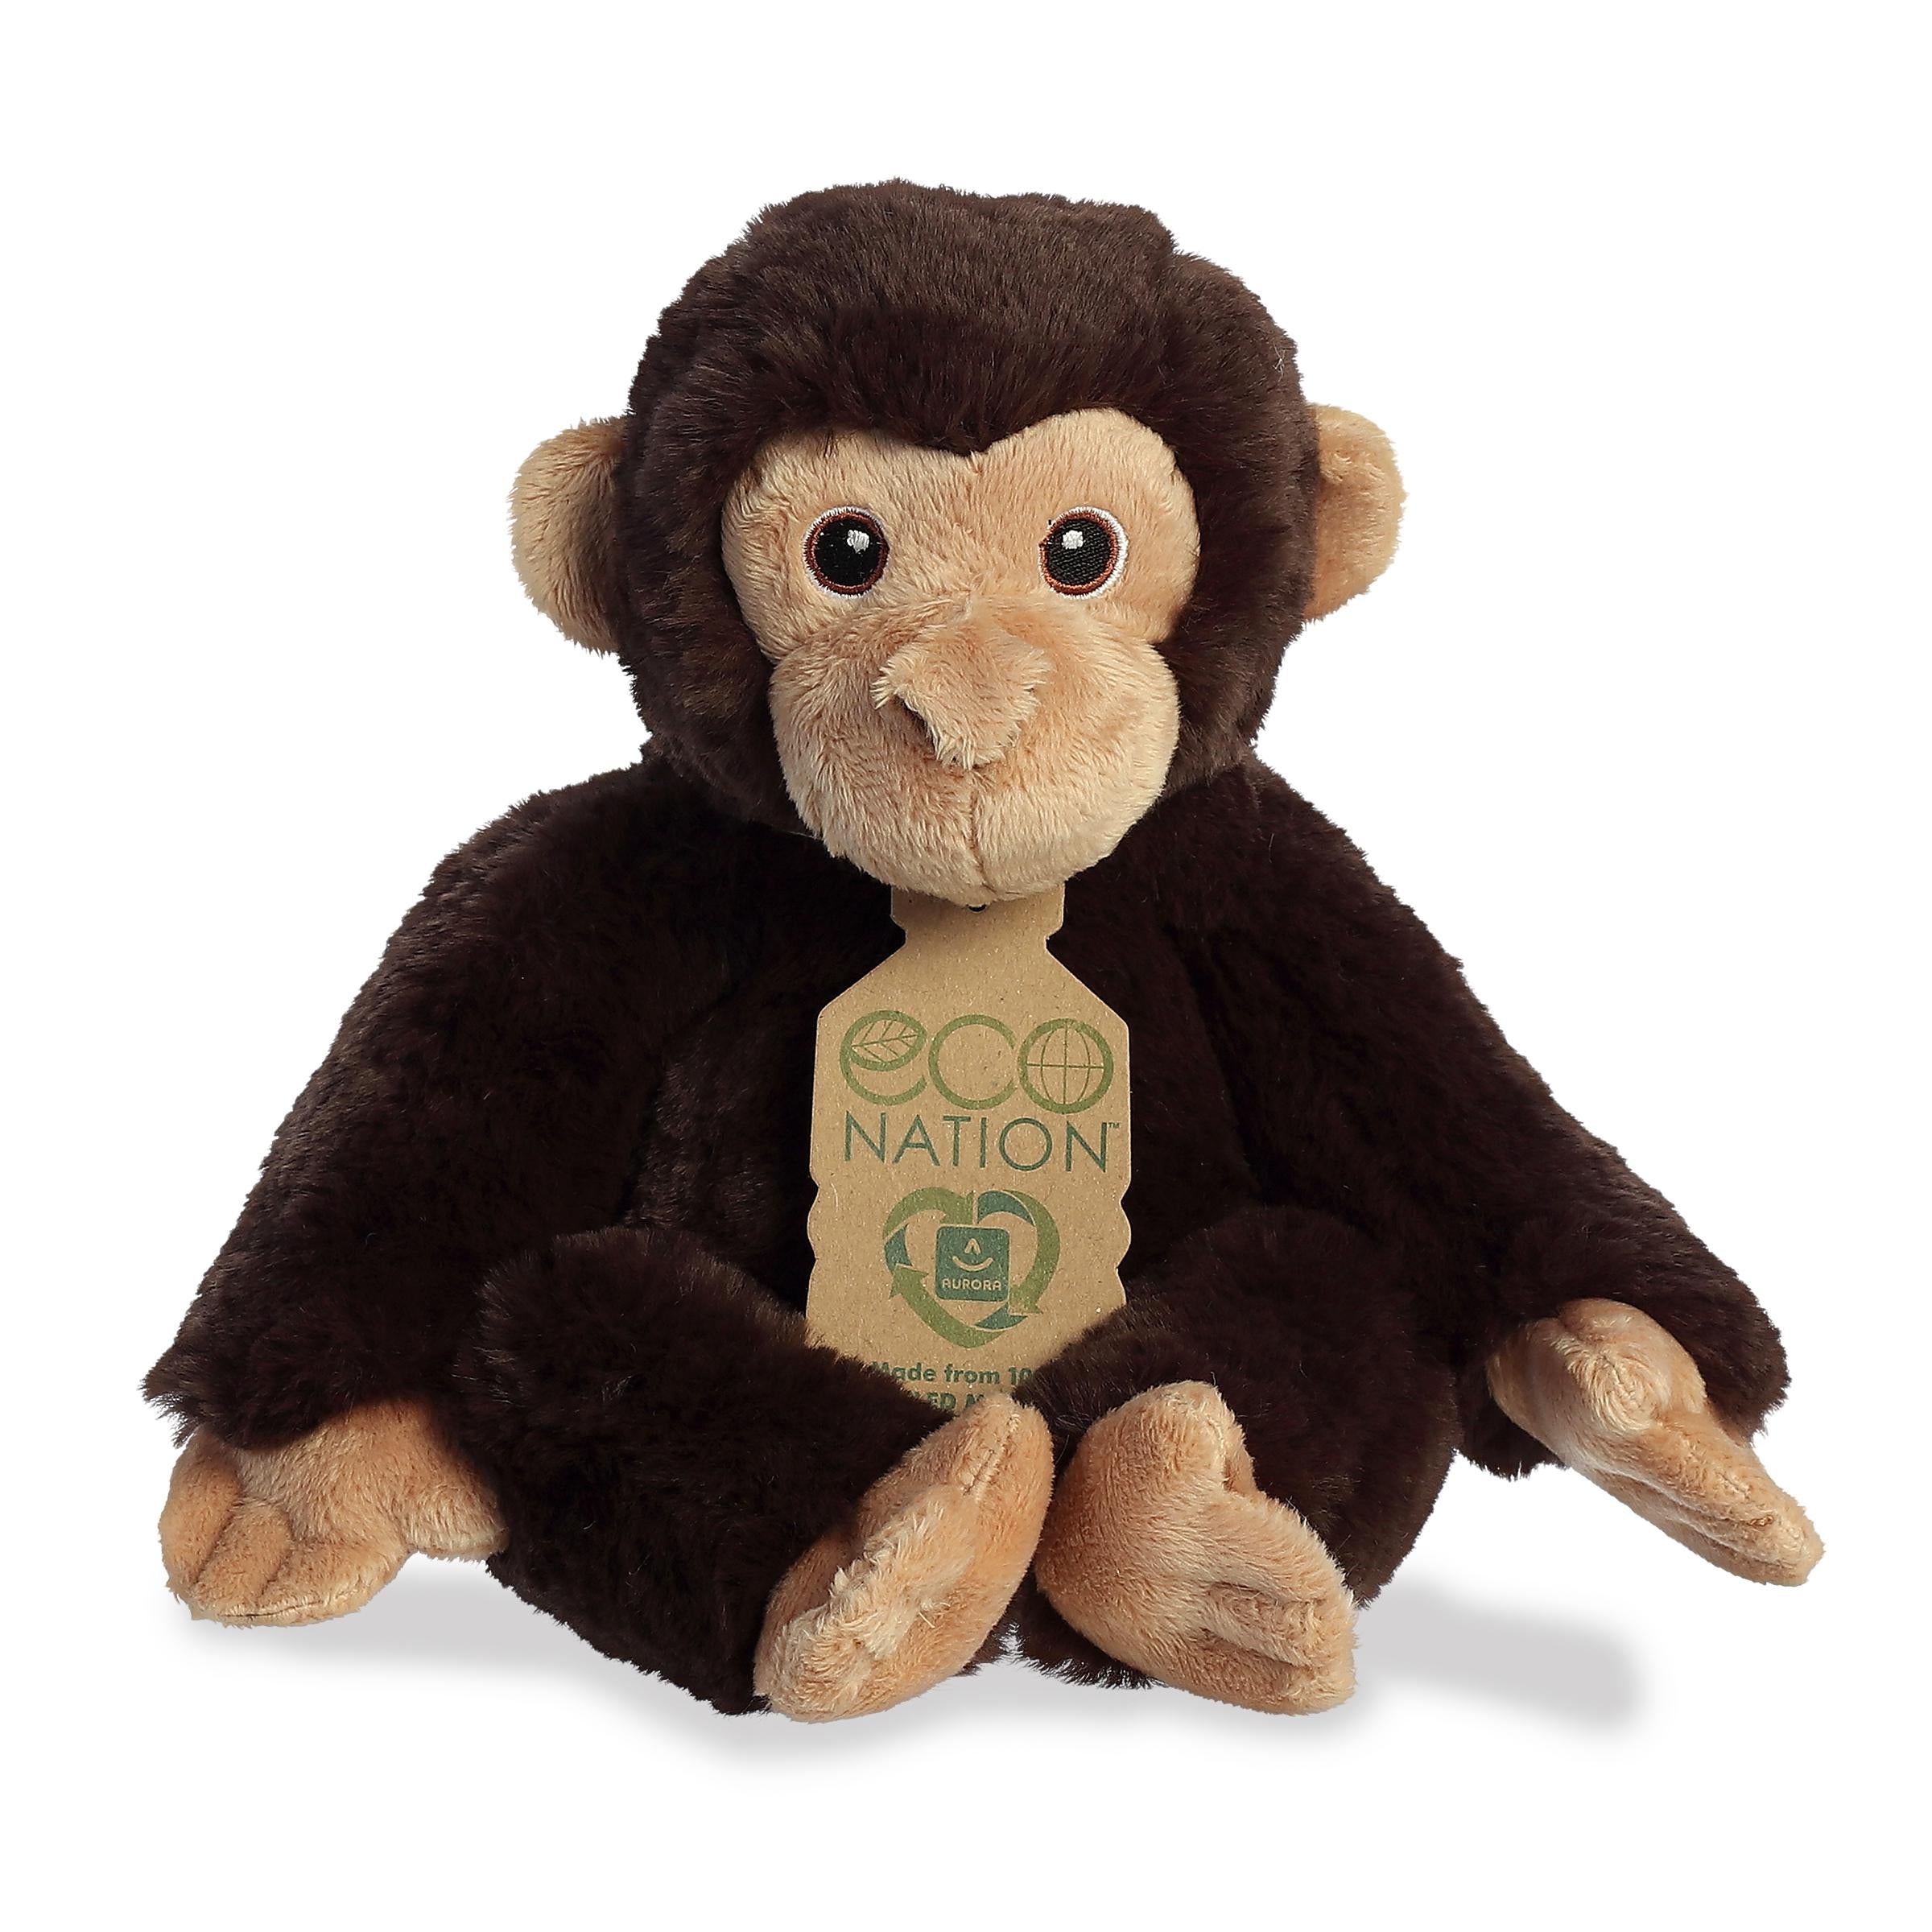 Chimpanzee Ã¢â‚¬â€œ Playful Eco-Nation Stuffed Animals Ã¢â‚¬â€œ